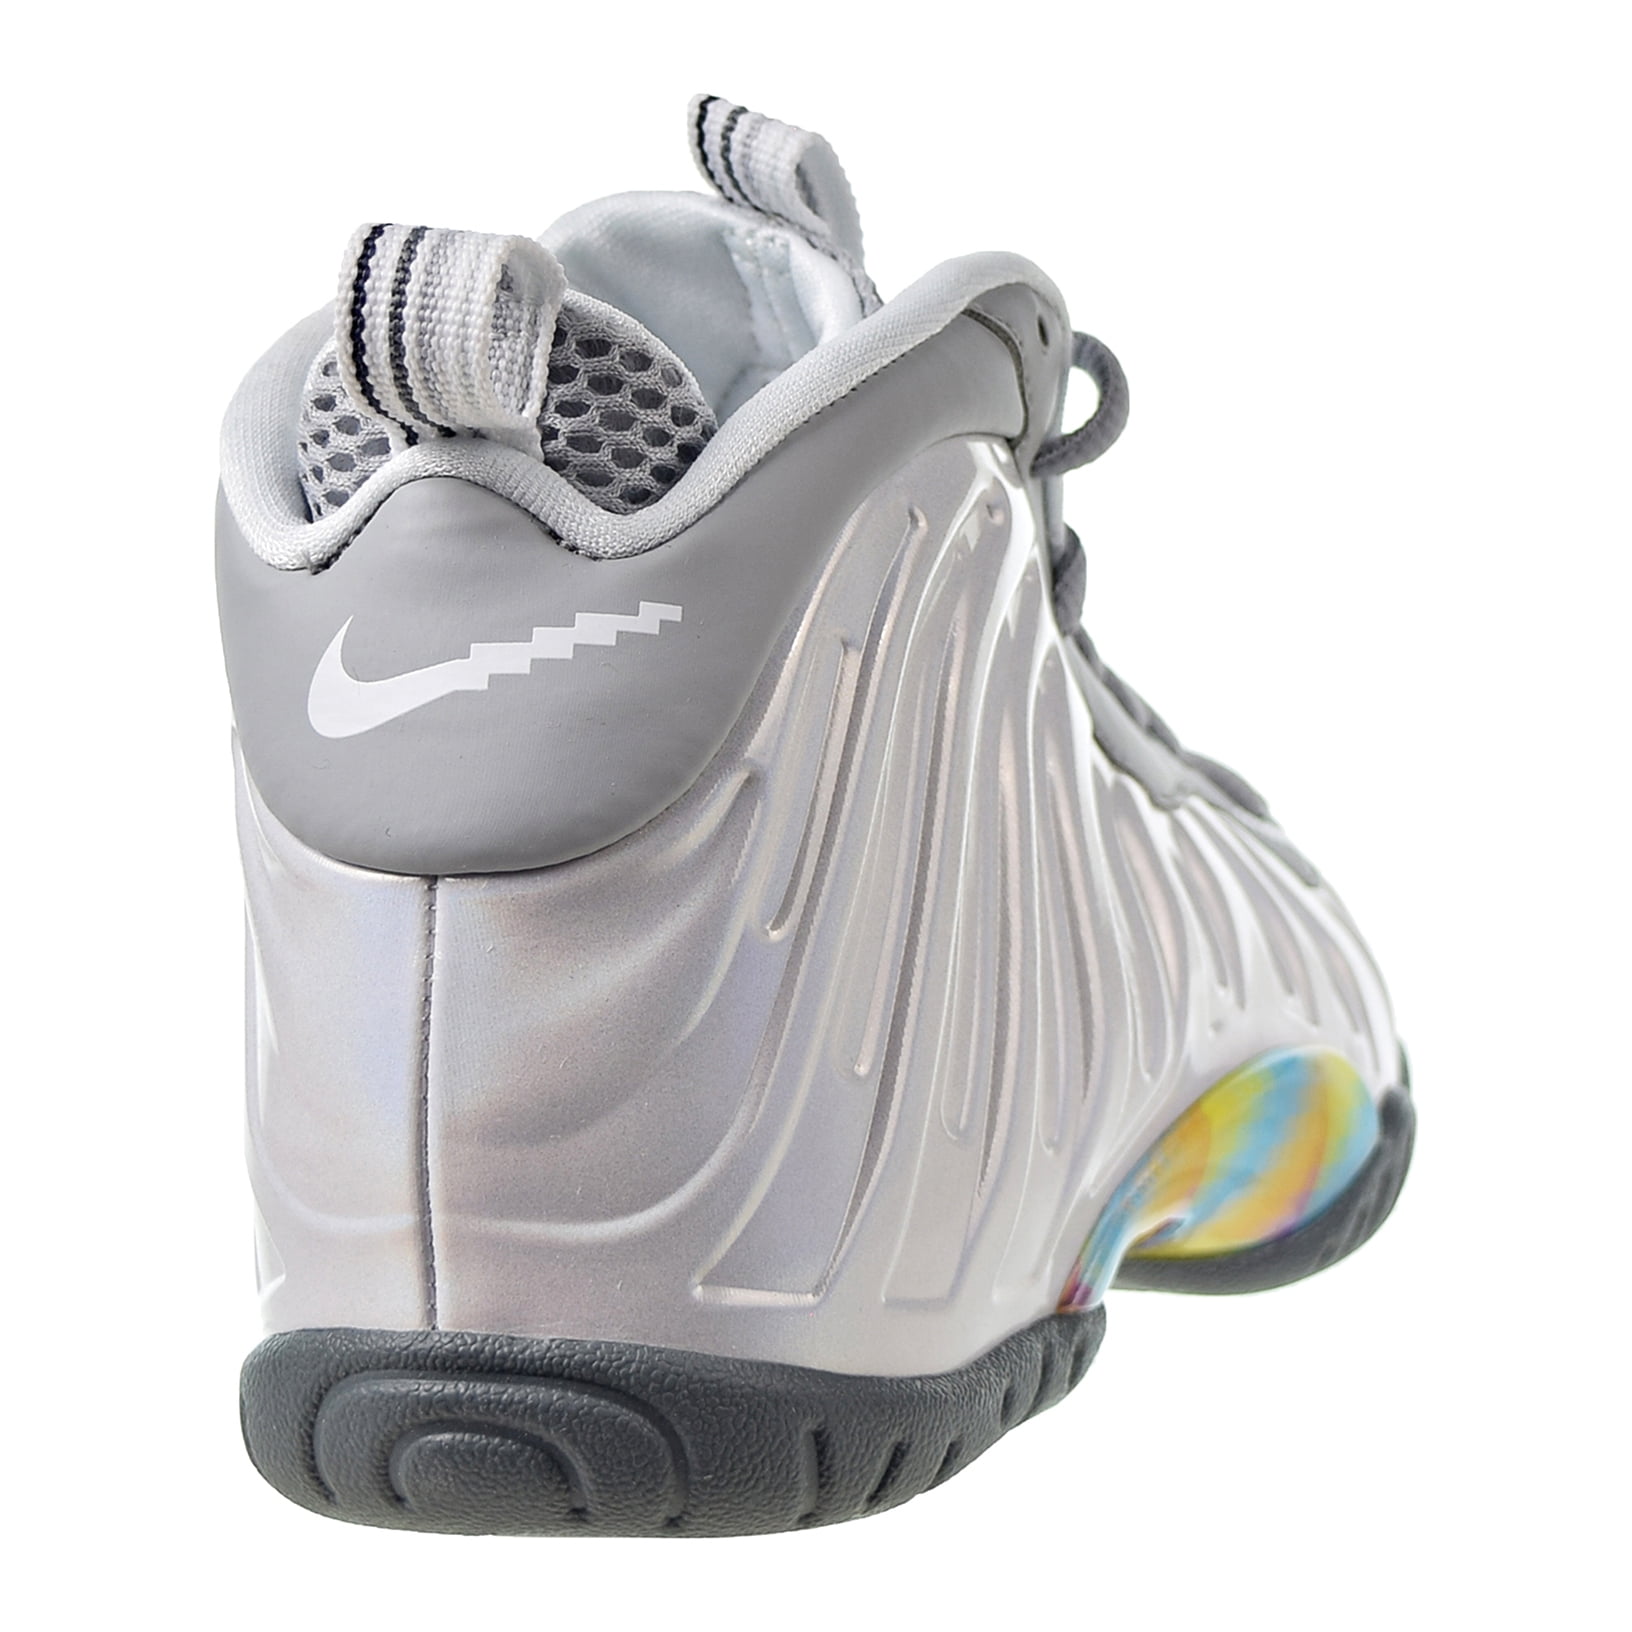 Nike Little One Big Kid's Shoes Light Fury cu1054-001 - Walmart.com